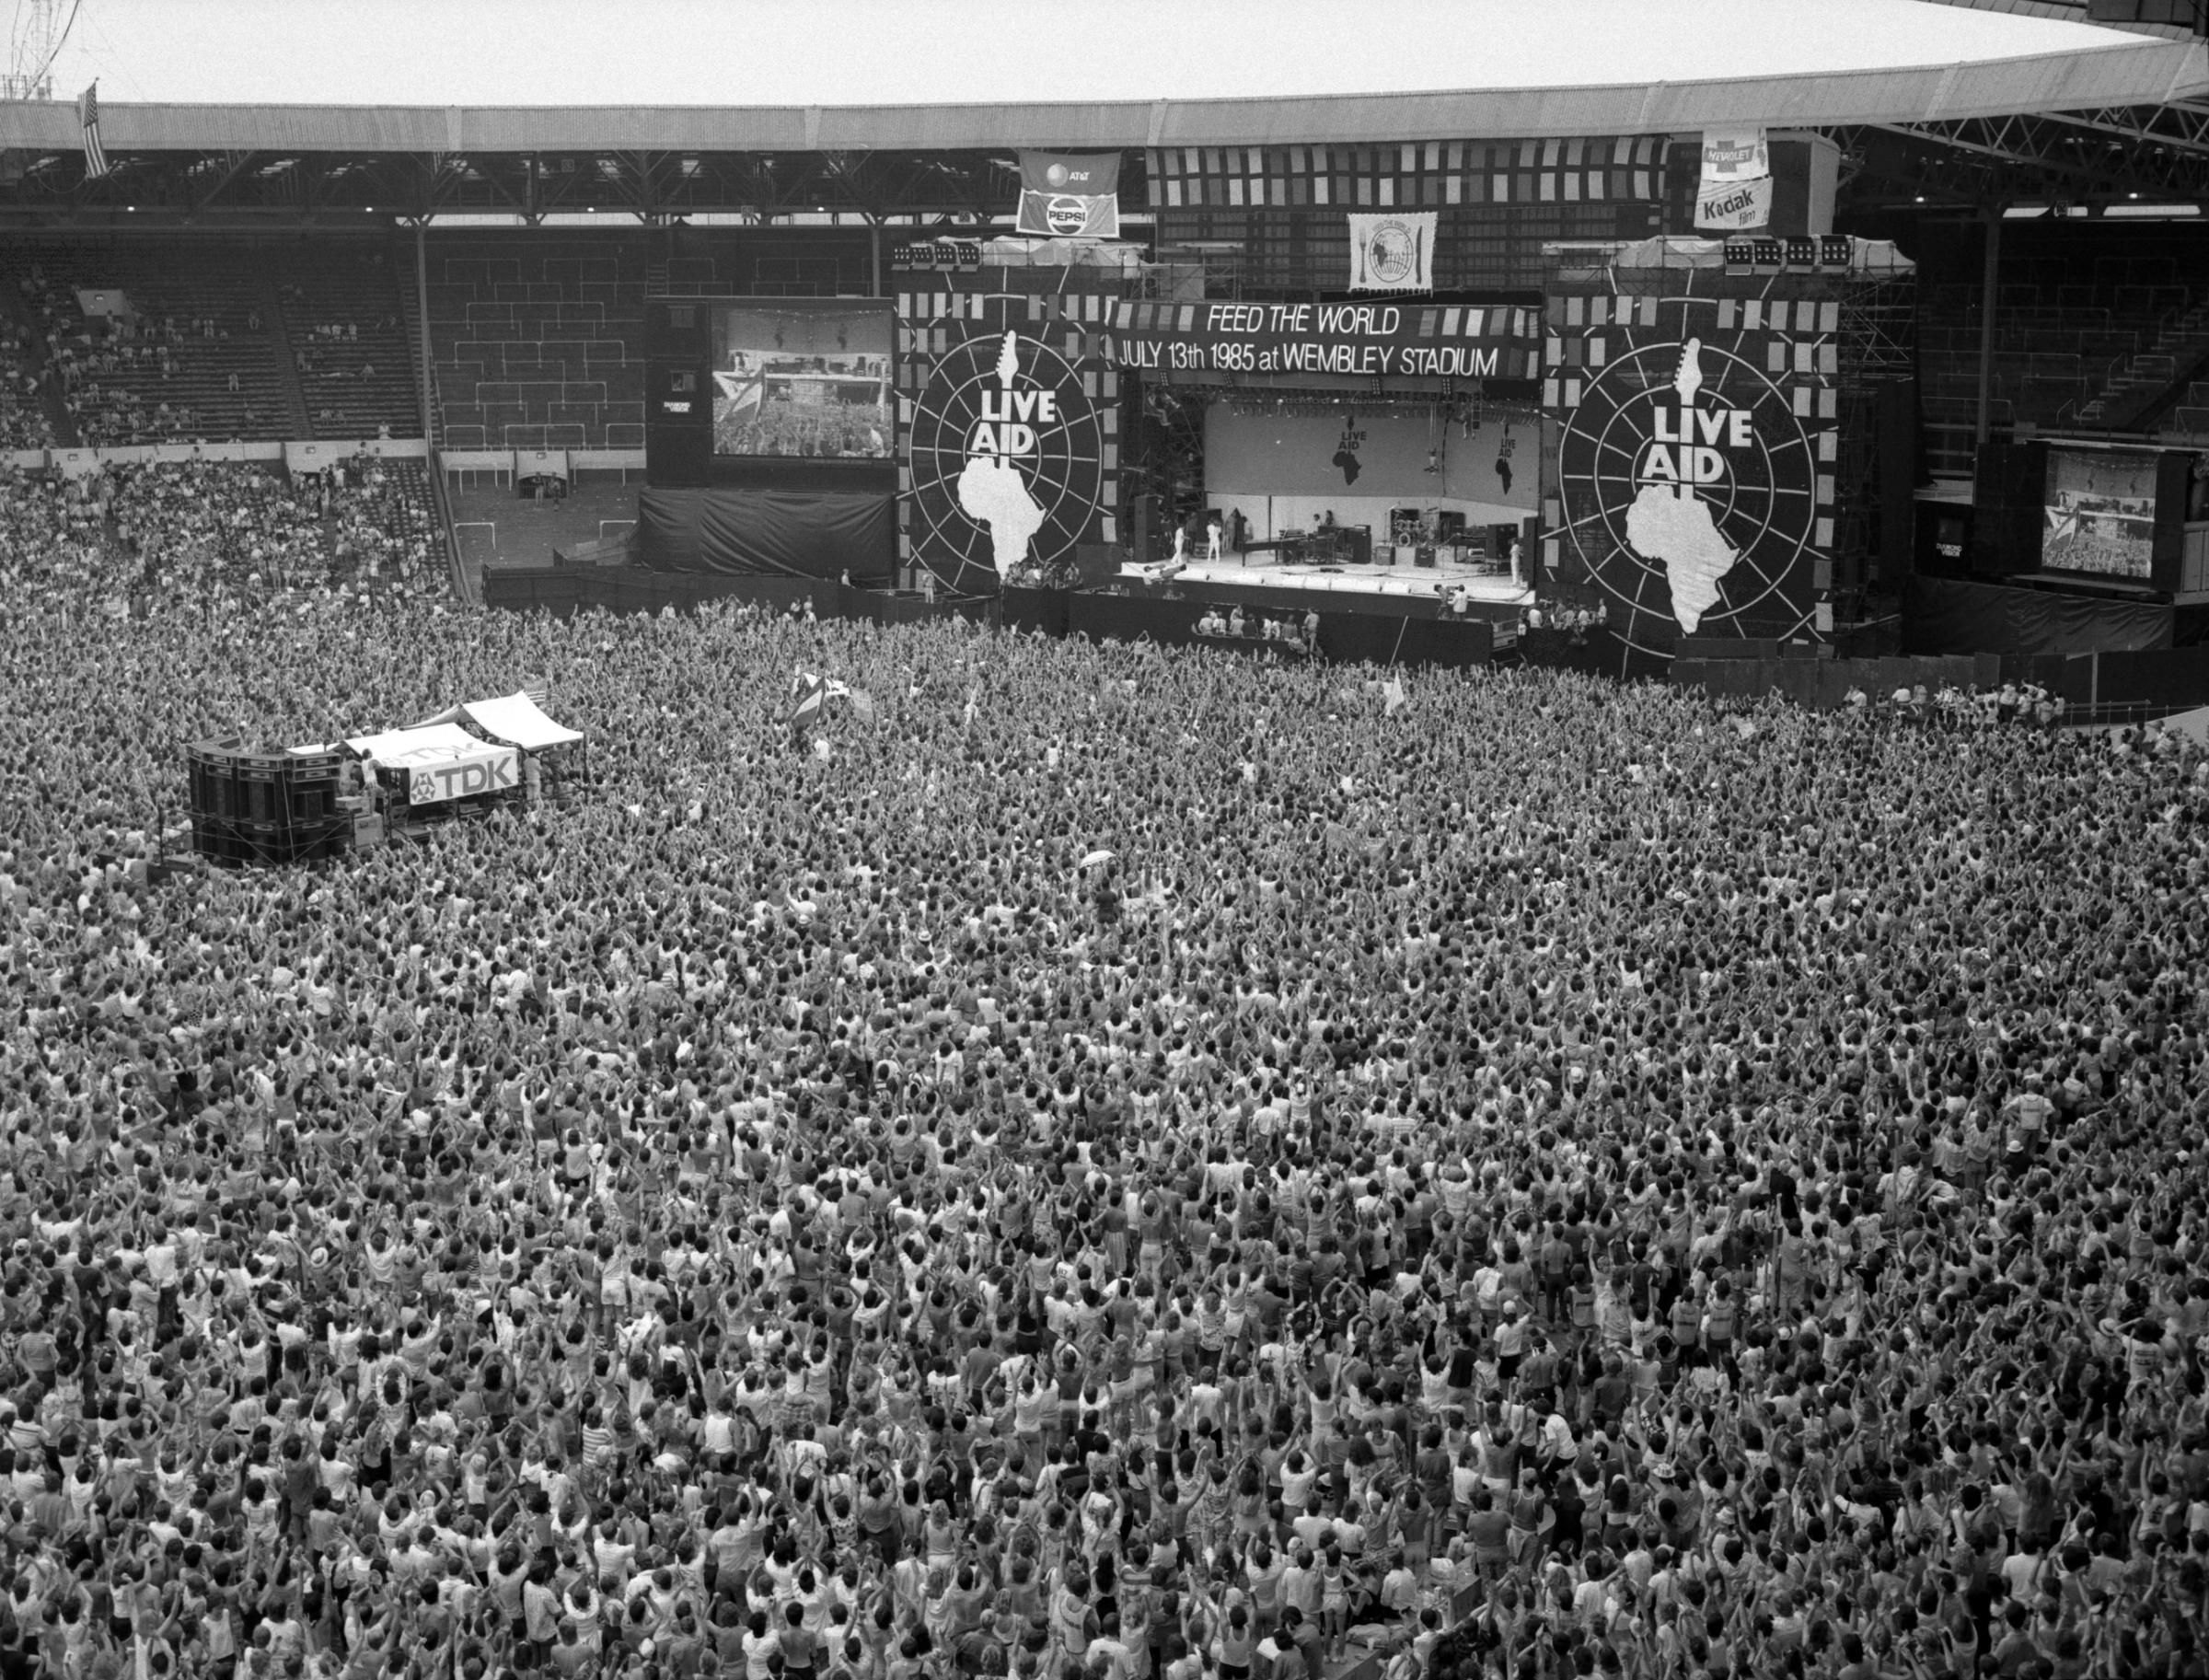 Crowd shot during LIFE AID at Wembley Stadium, July 13, 1985.